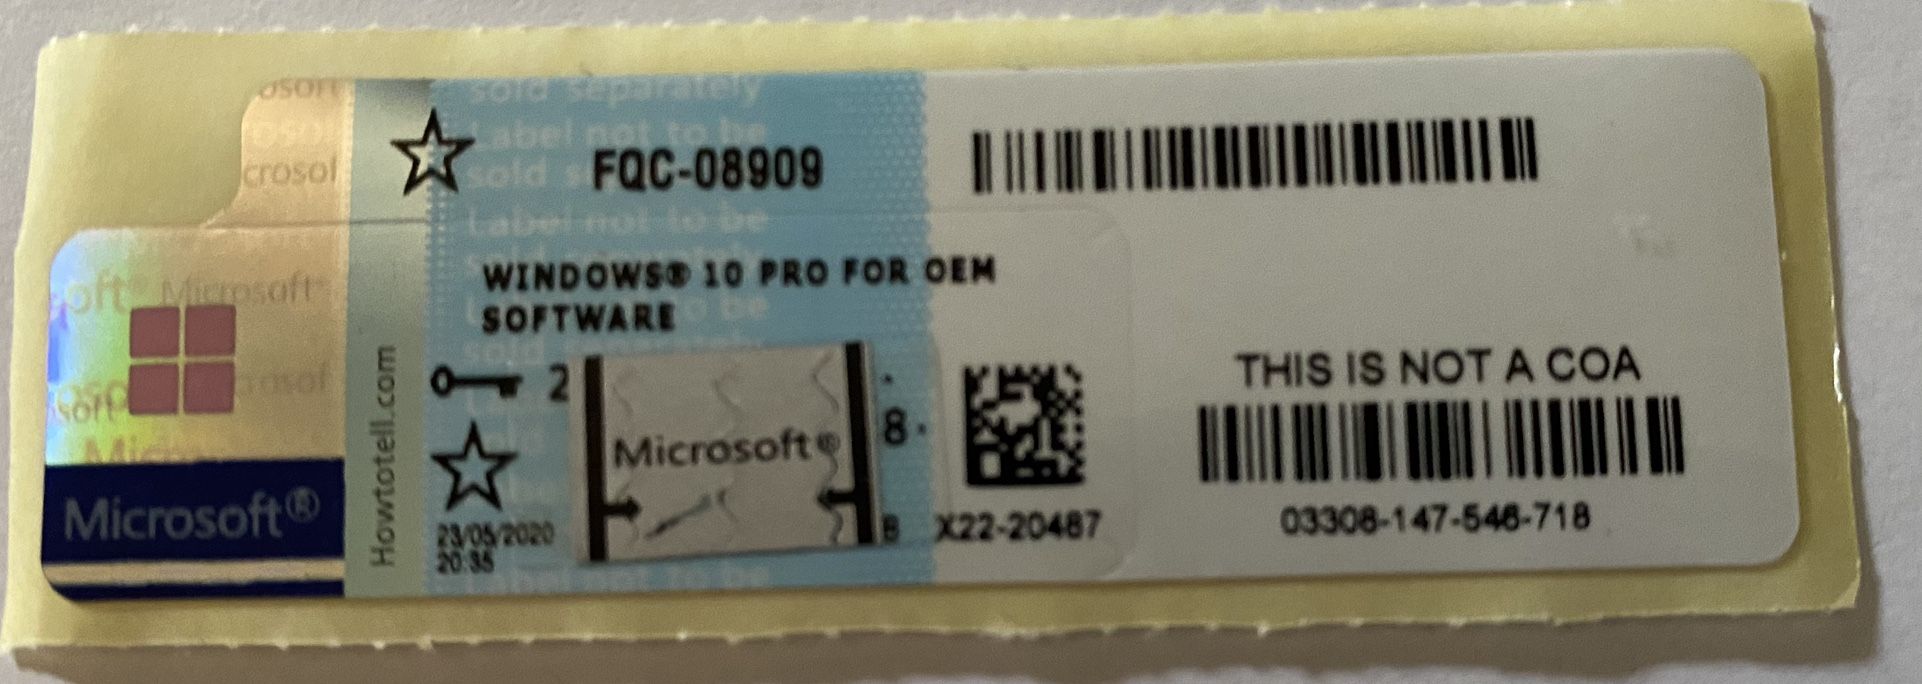 Microsoft Windows 10 Pro 64Bit OEM Product key 